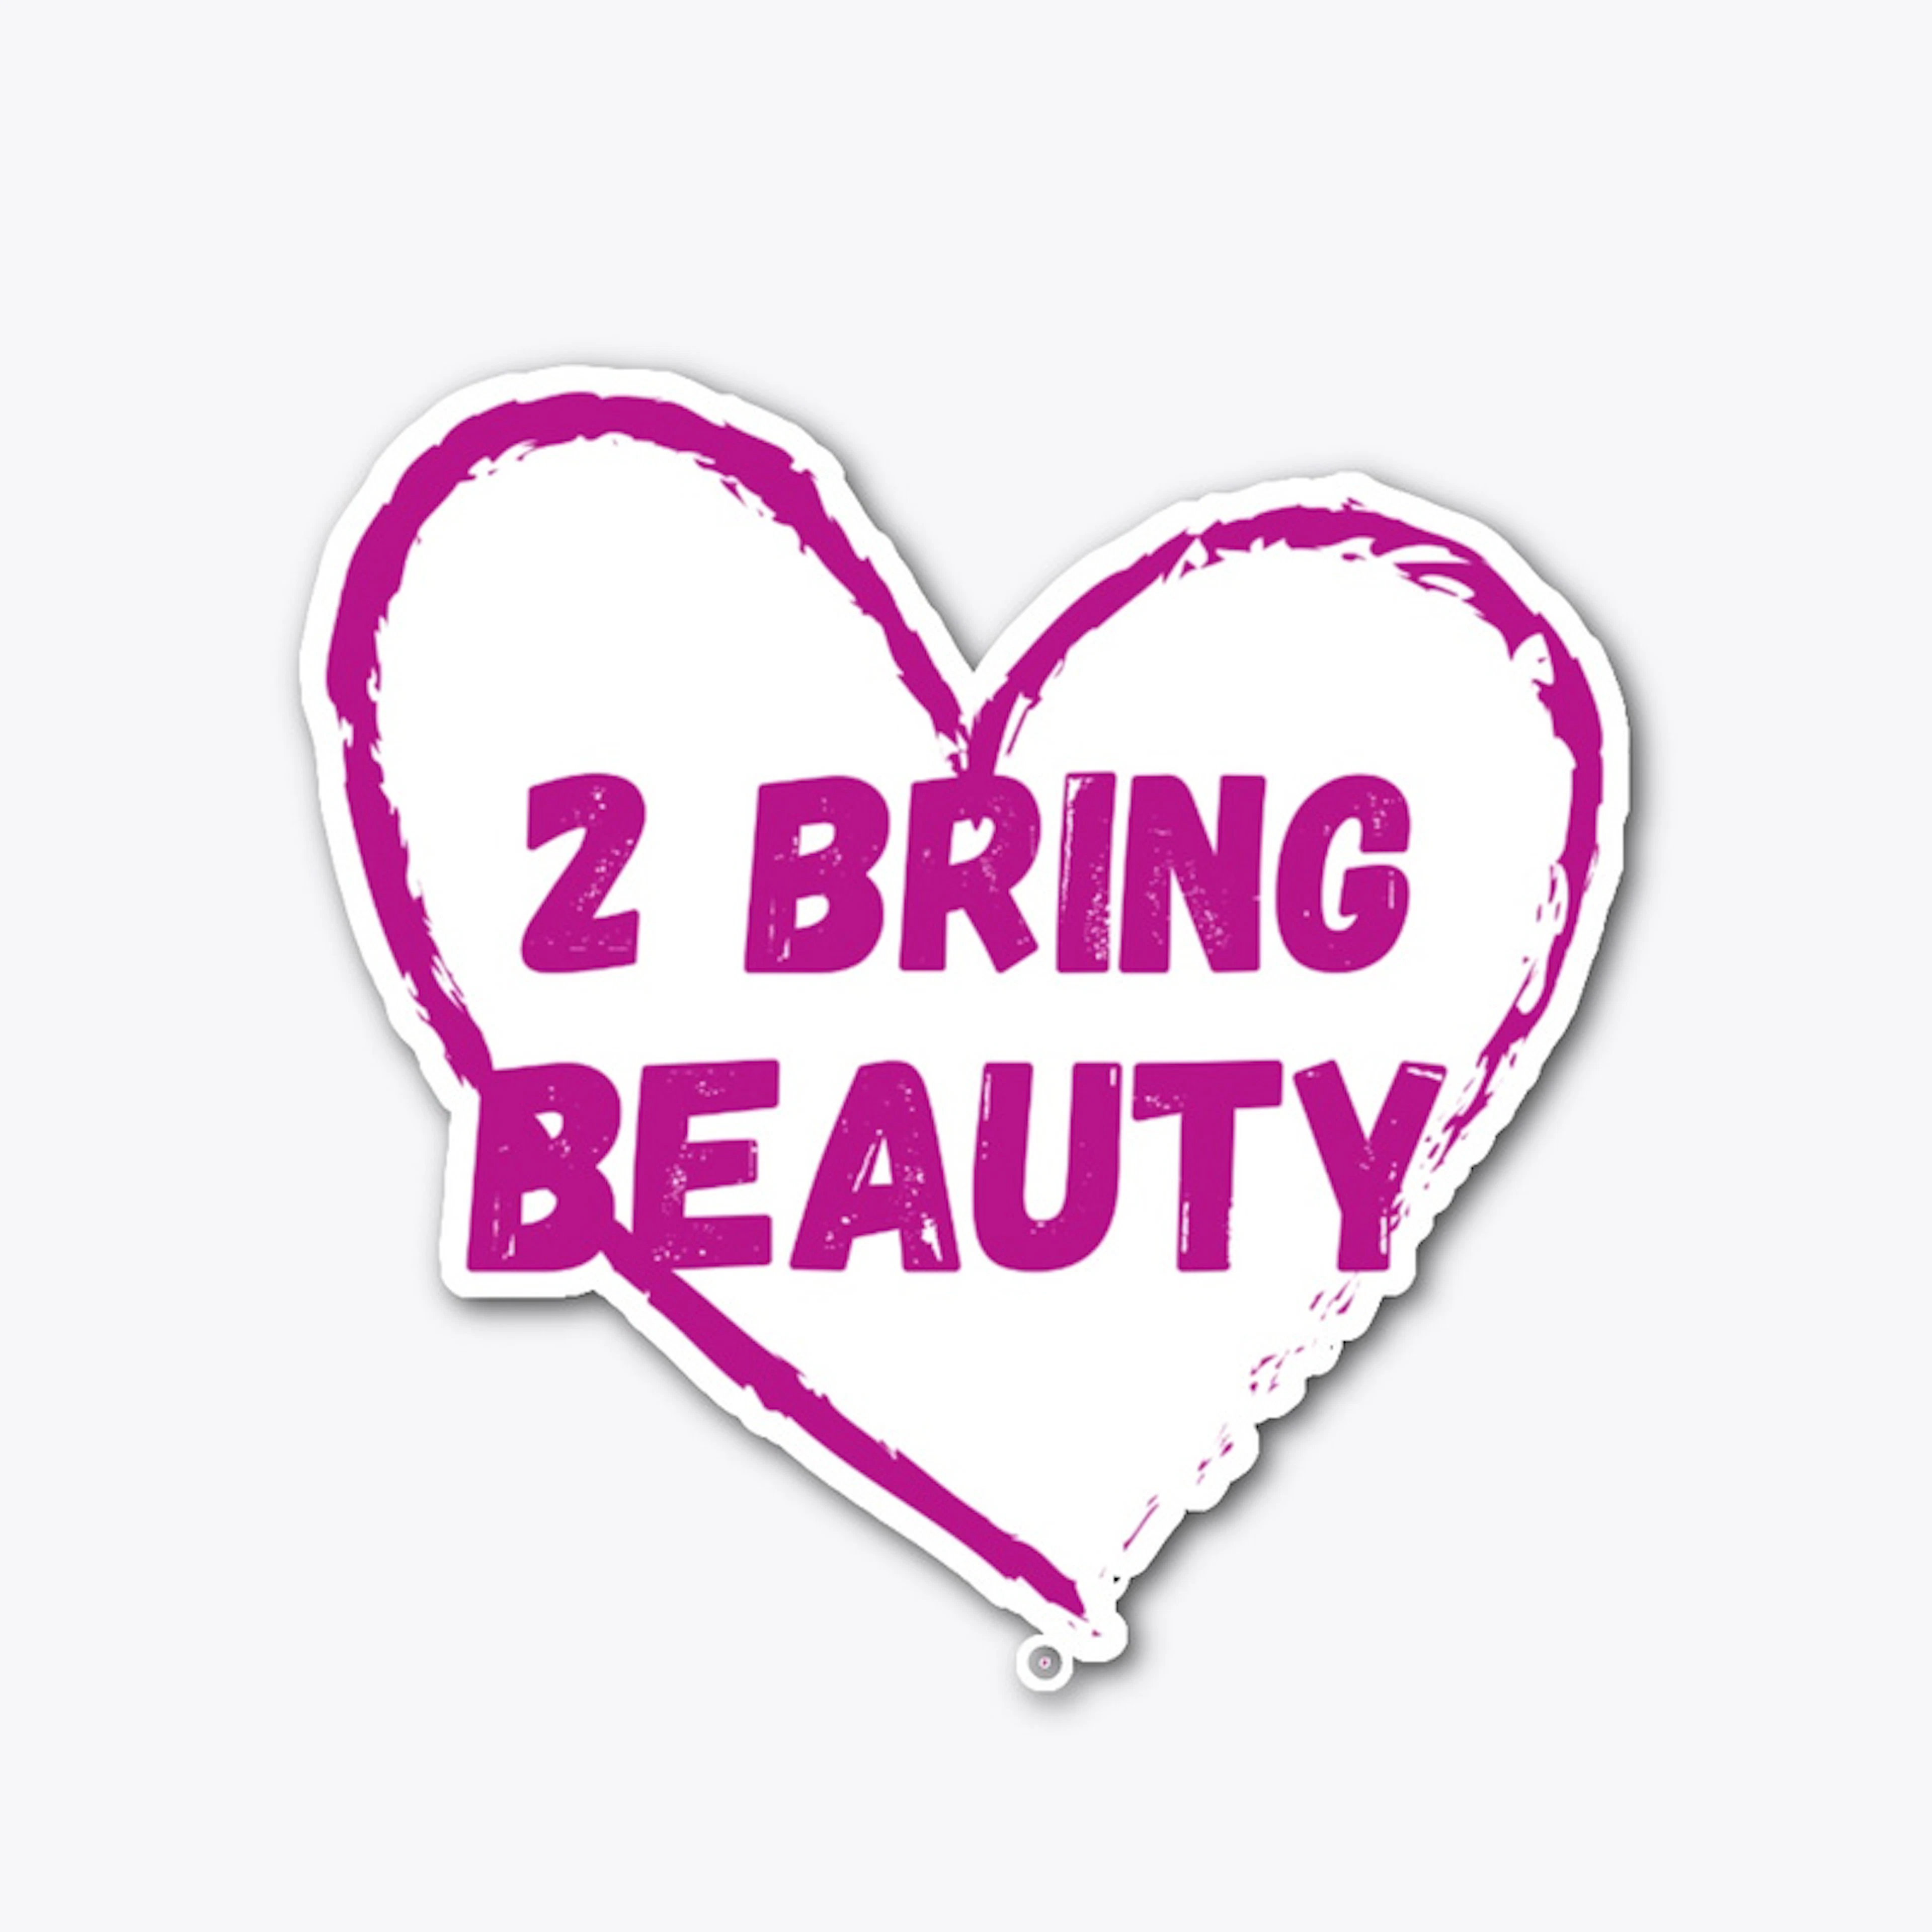 2 Bring Beauty